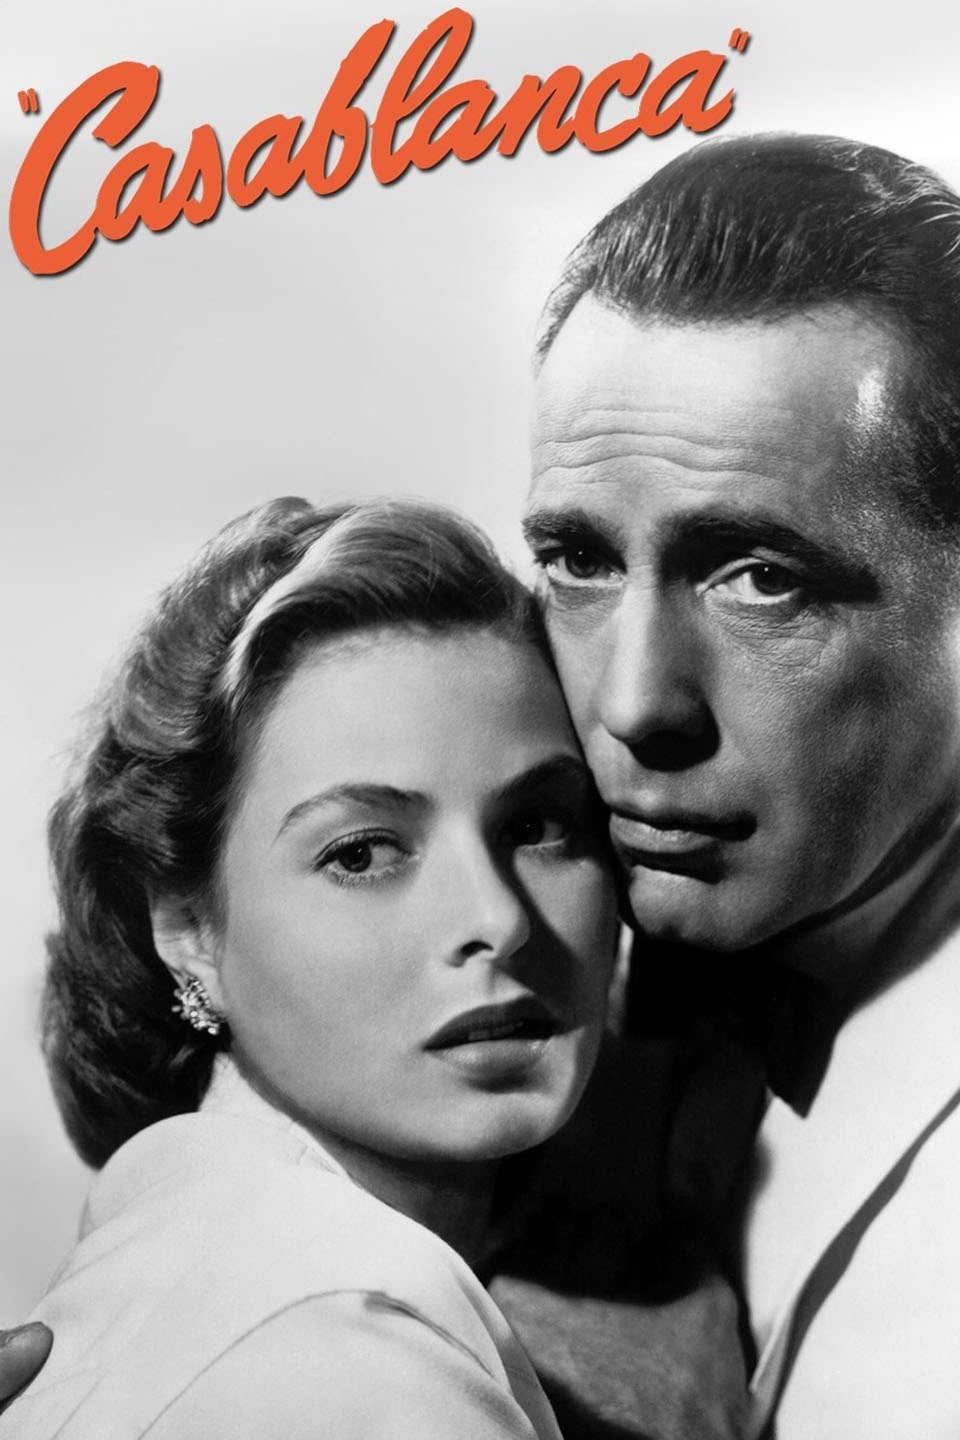 In Casablanca 40s dating in your Dating casablanca